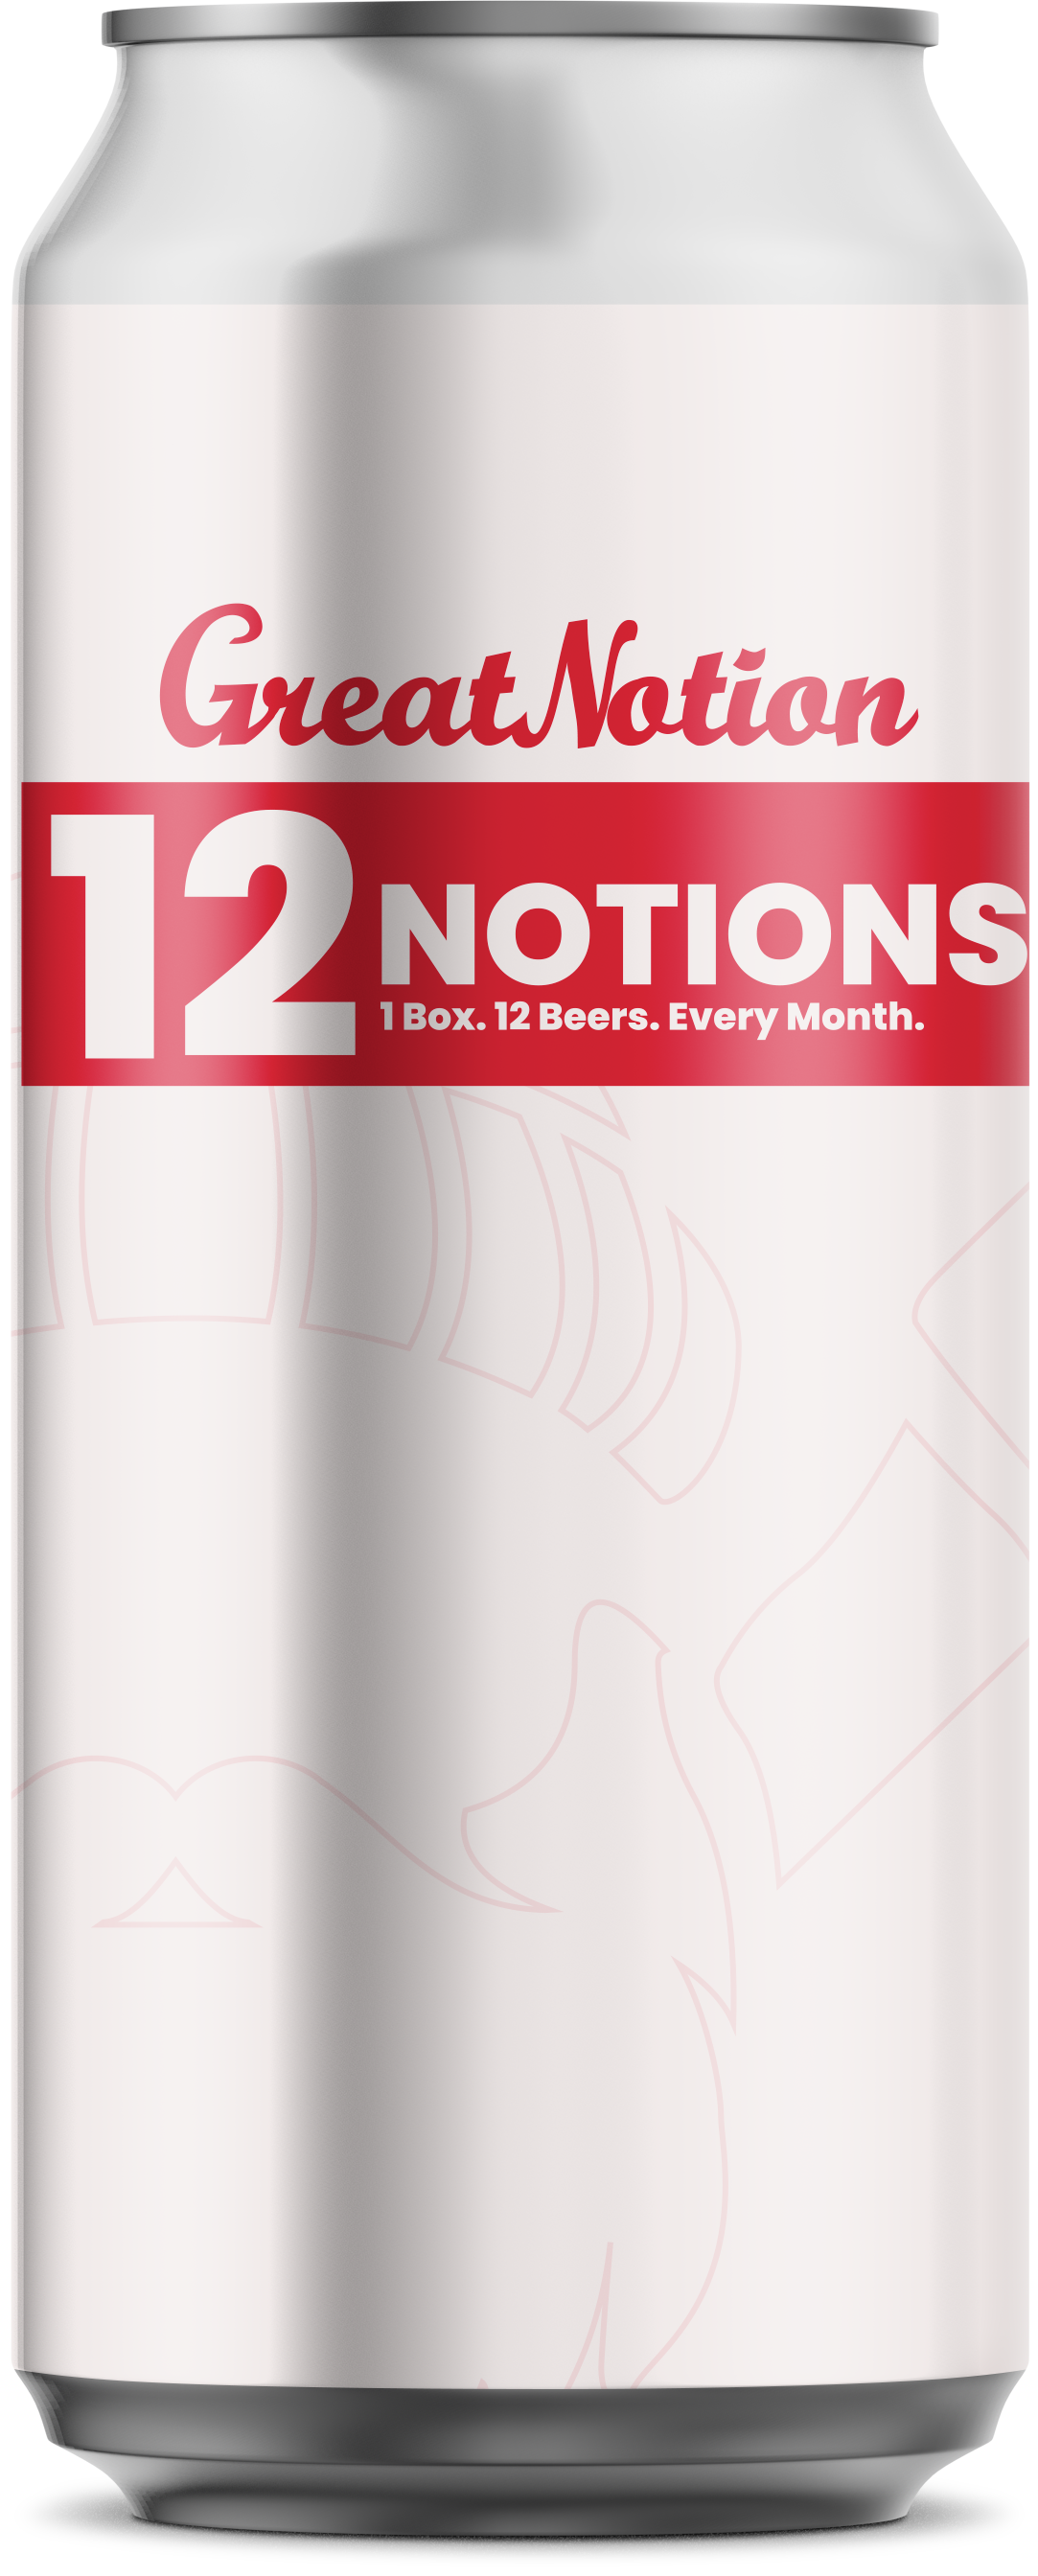 12 Notions - November